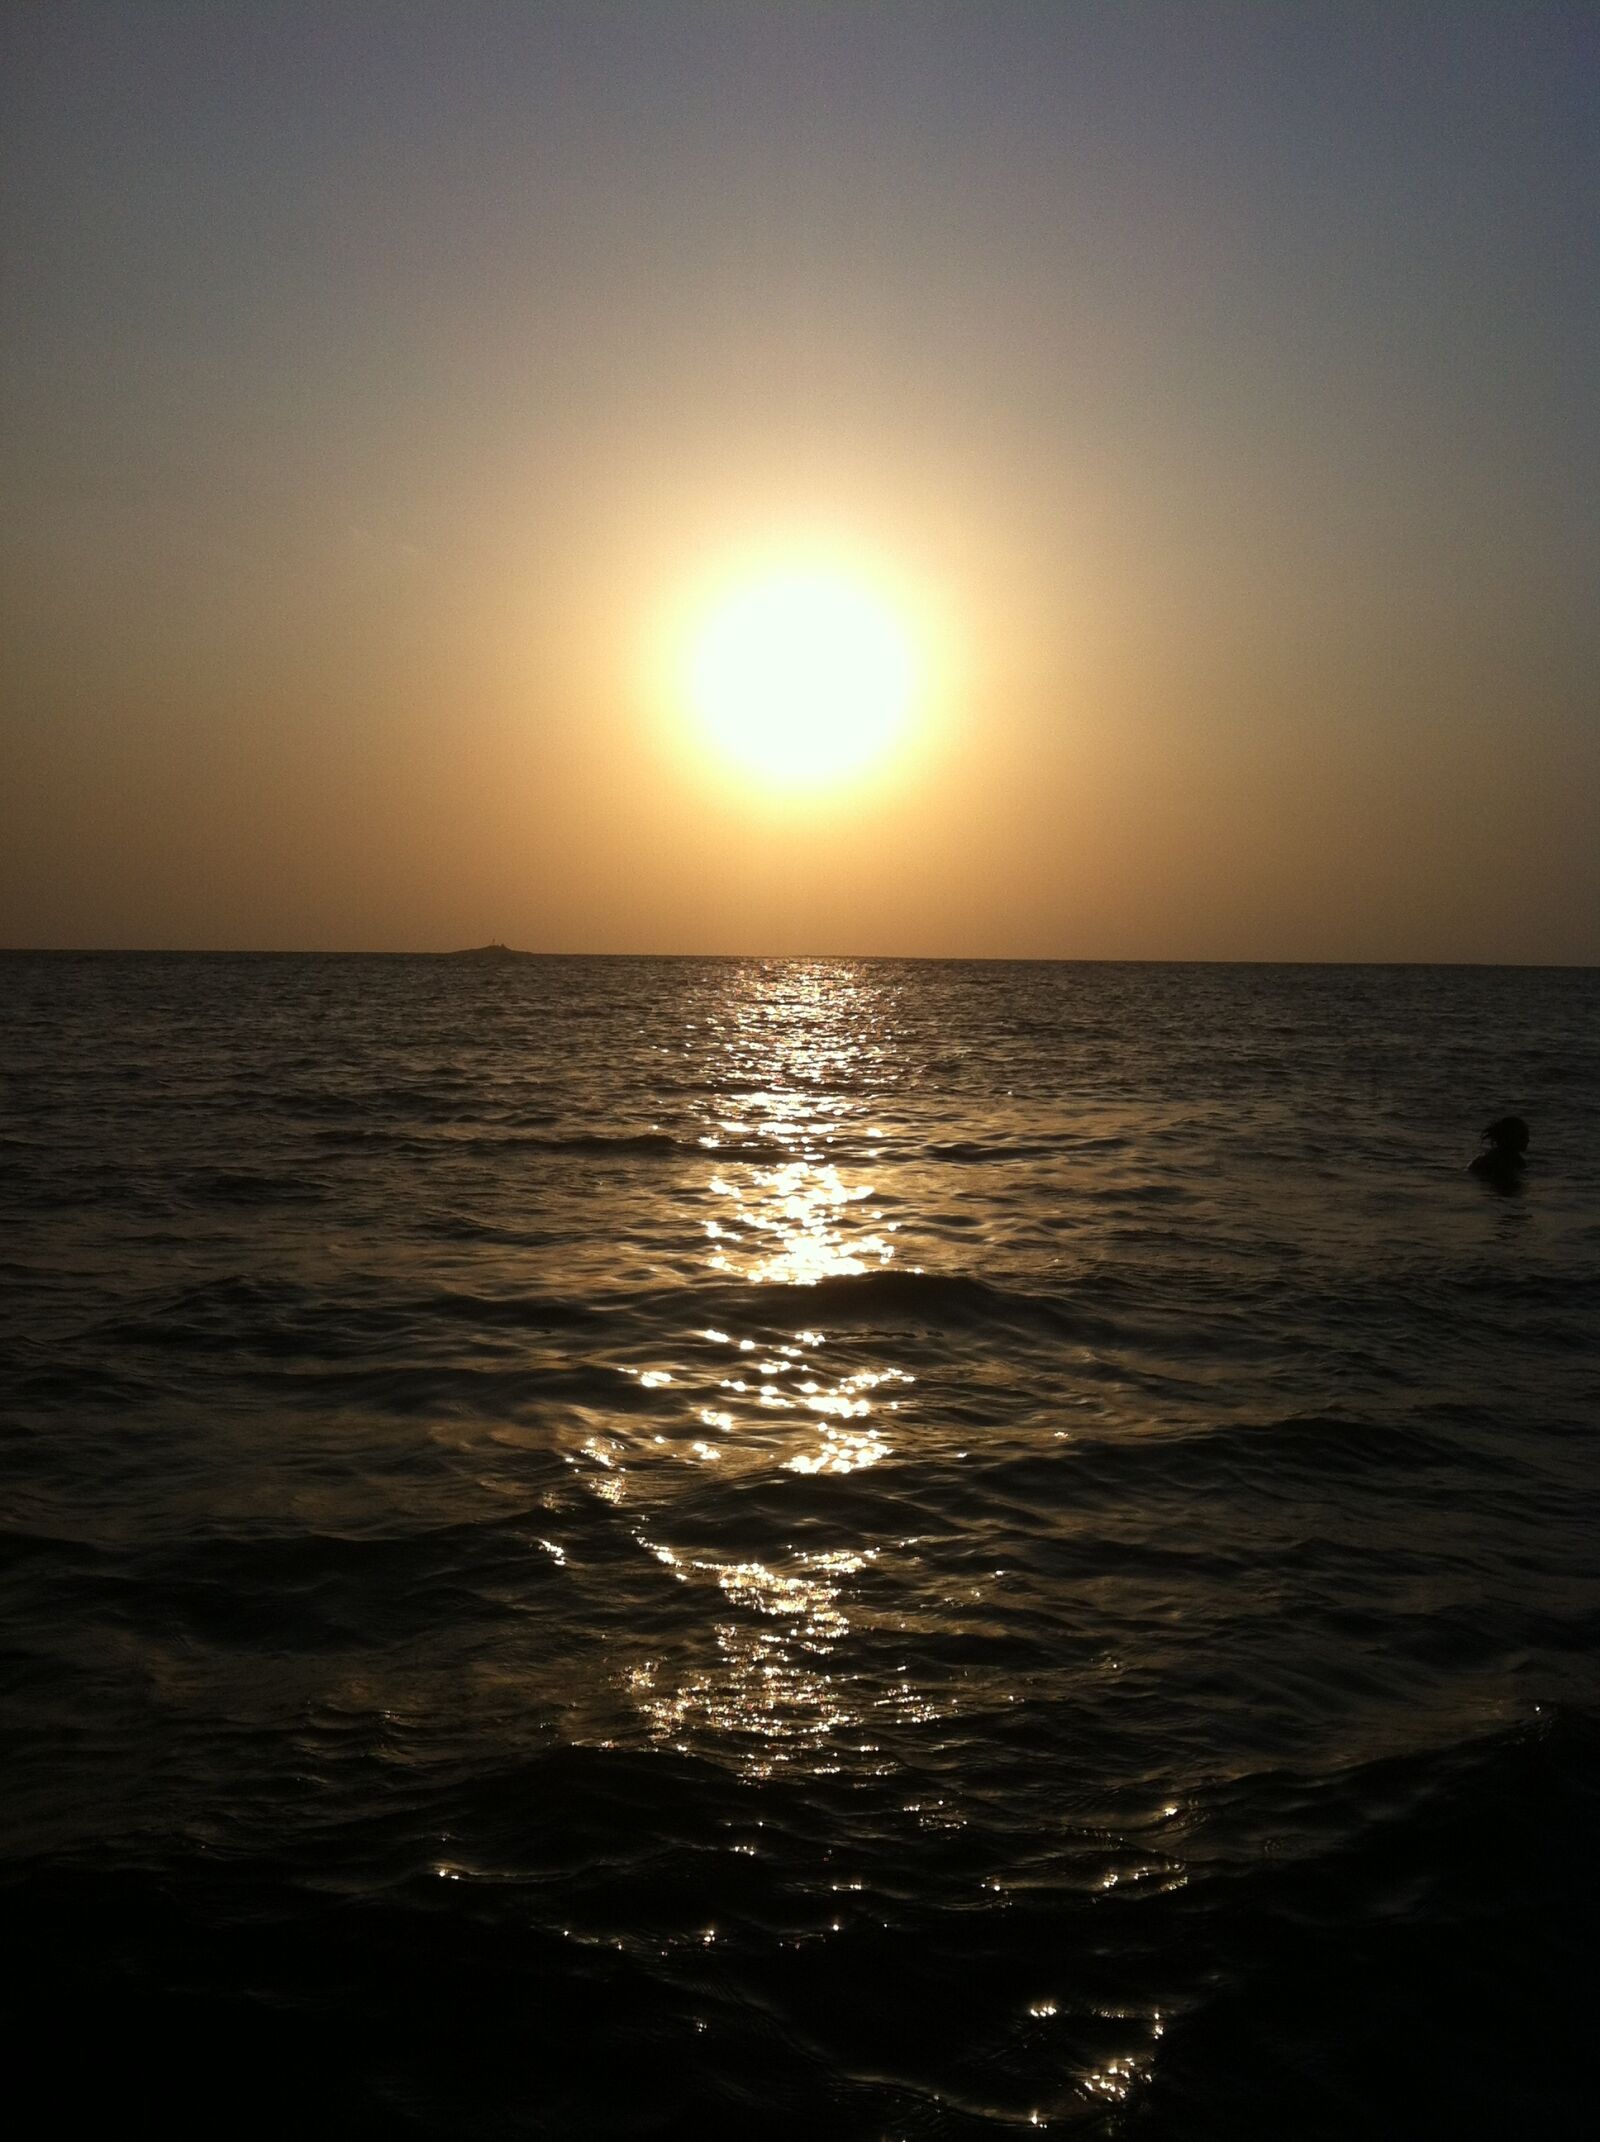 Apple iPhone 4 sample photo. Nature, sunset, beach, iphone photography